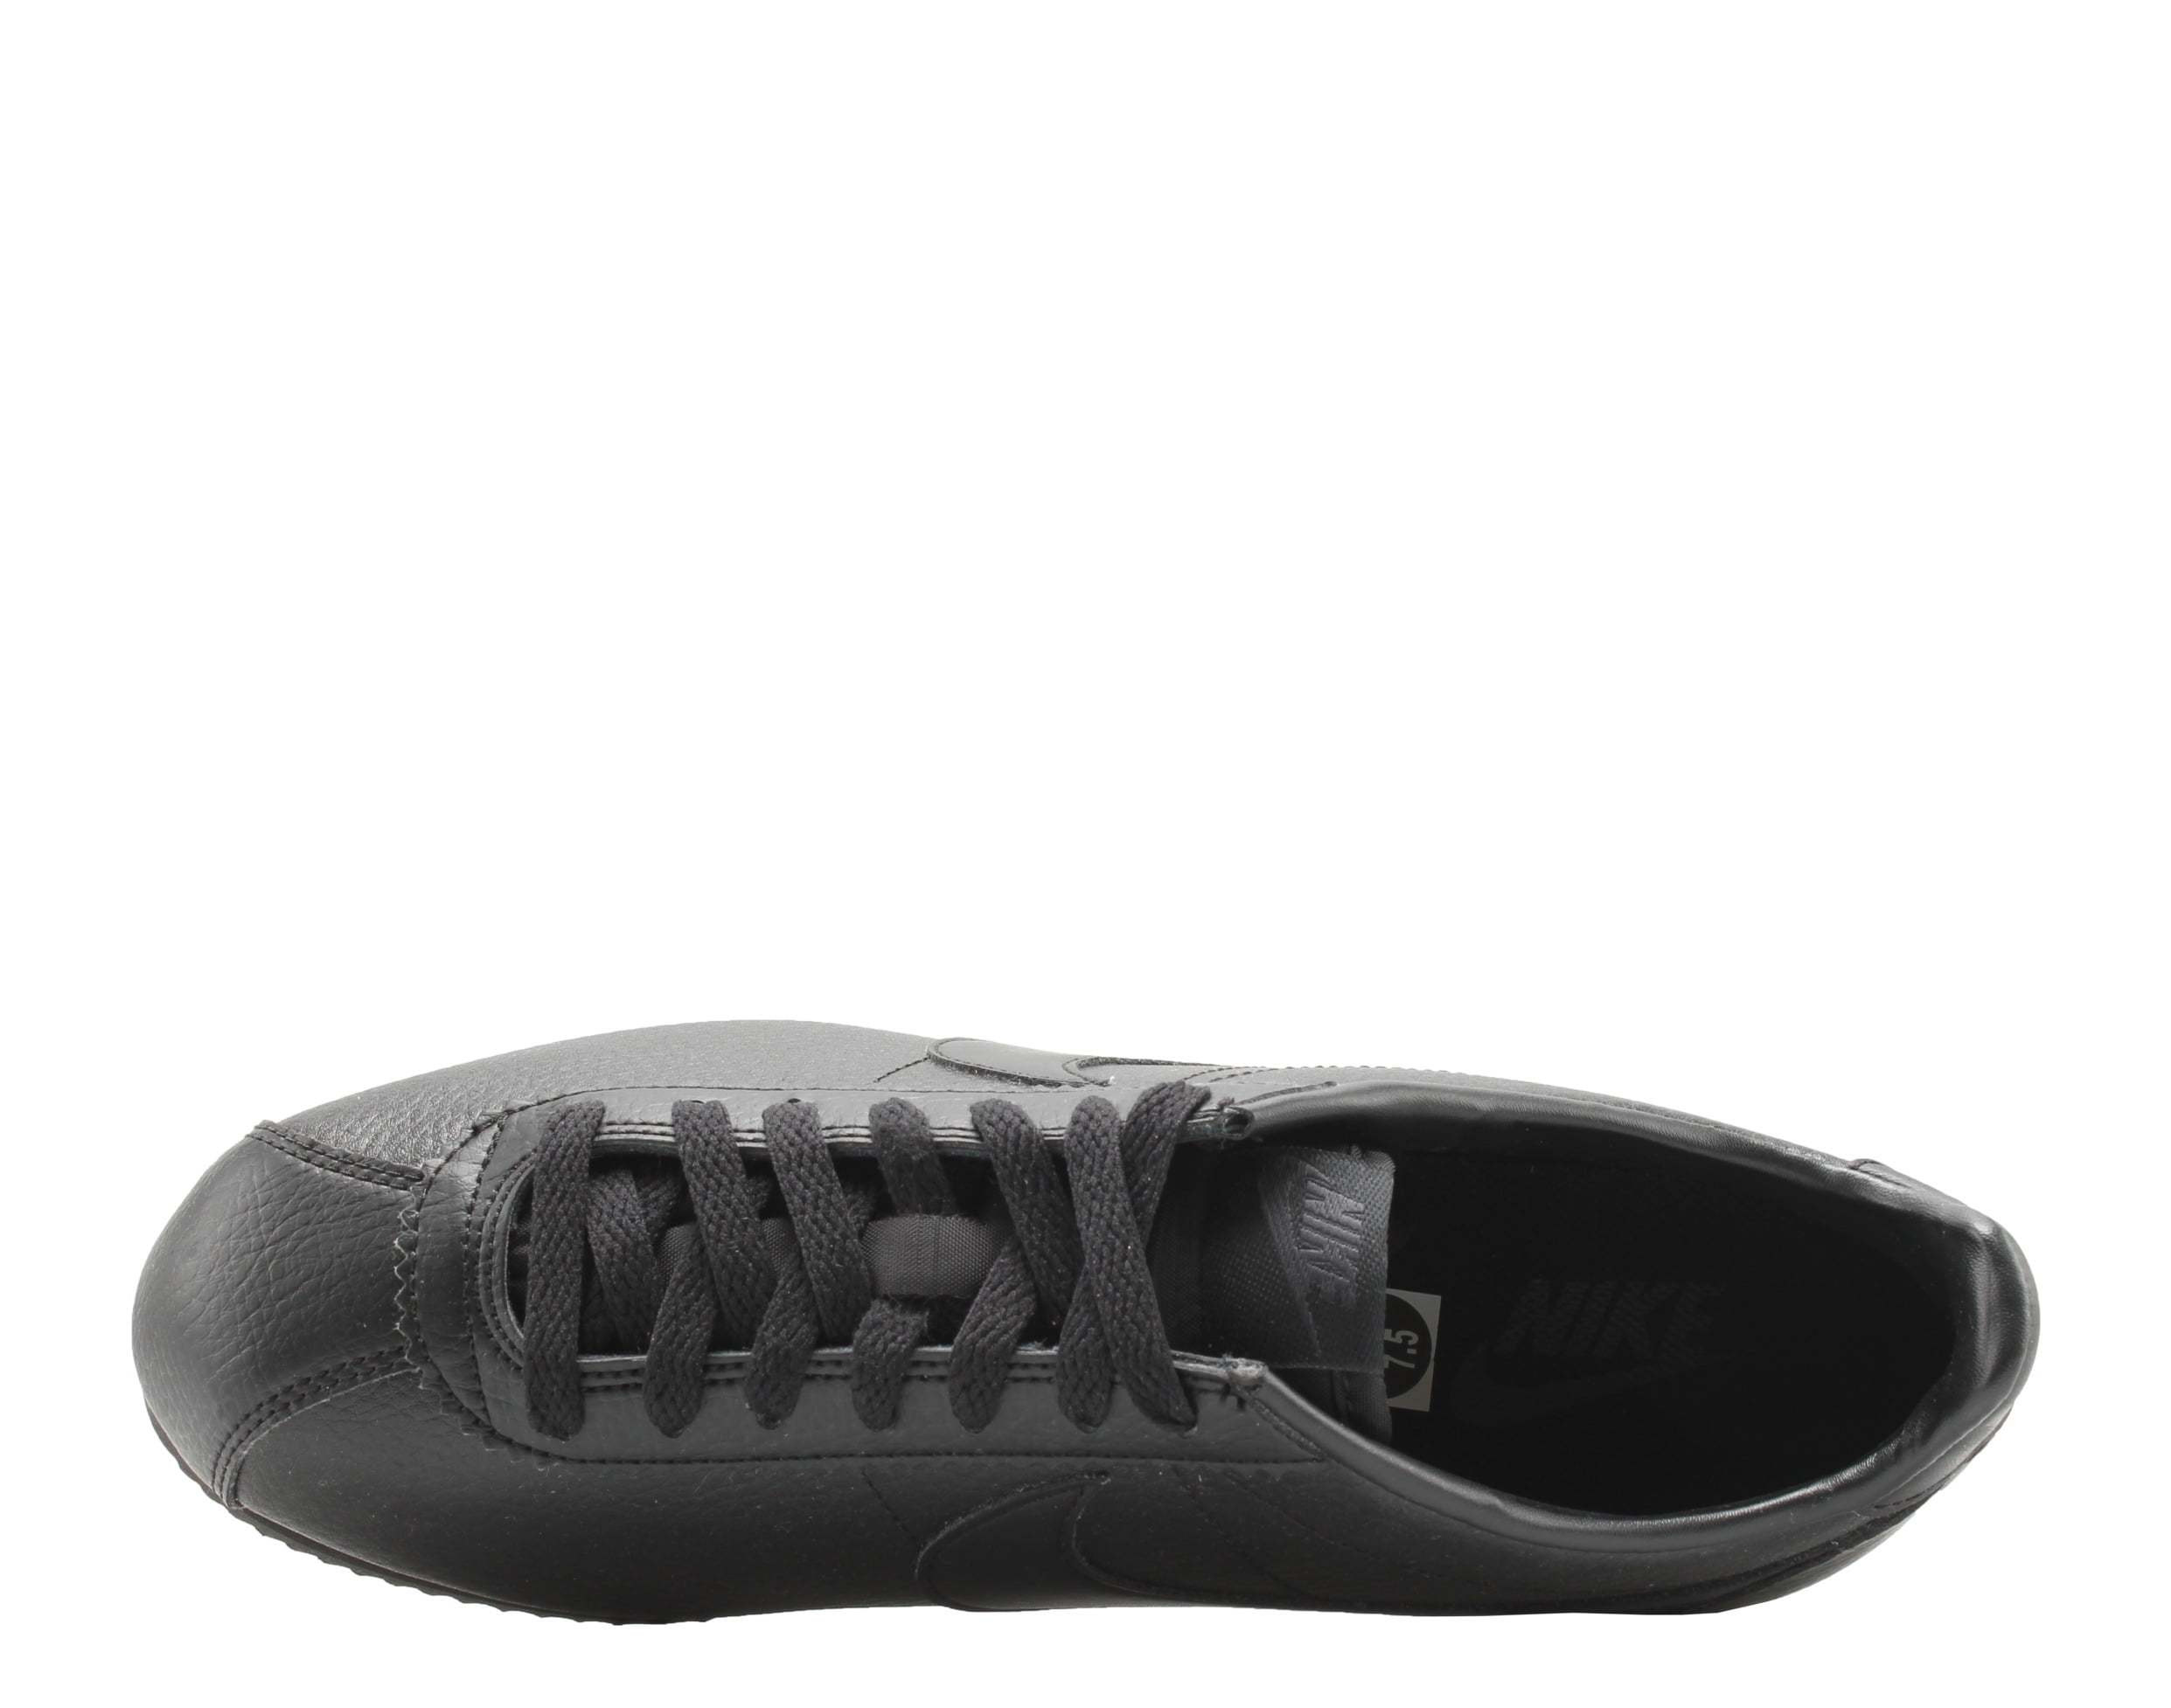 team domesticate platform Nike 749571-002: Mens Classic Cortez Leather Black/Black-Anthracite Sneaker  (9.5 D(M) US Men) - Walmart.com